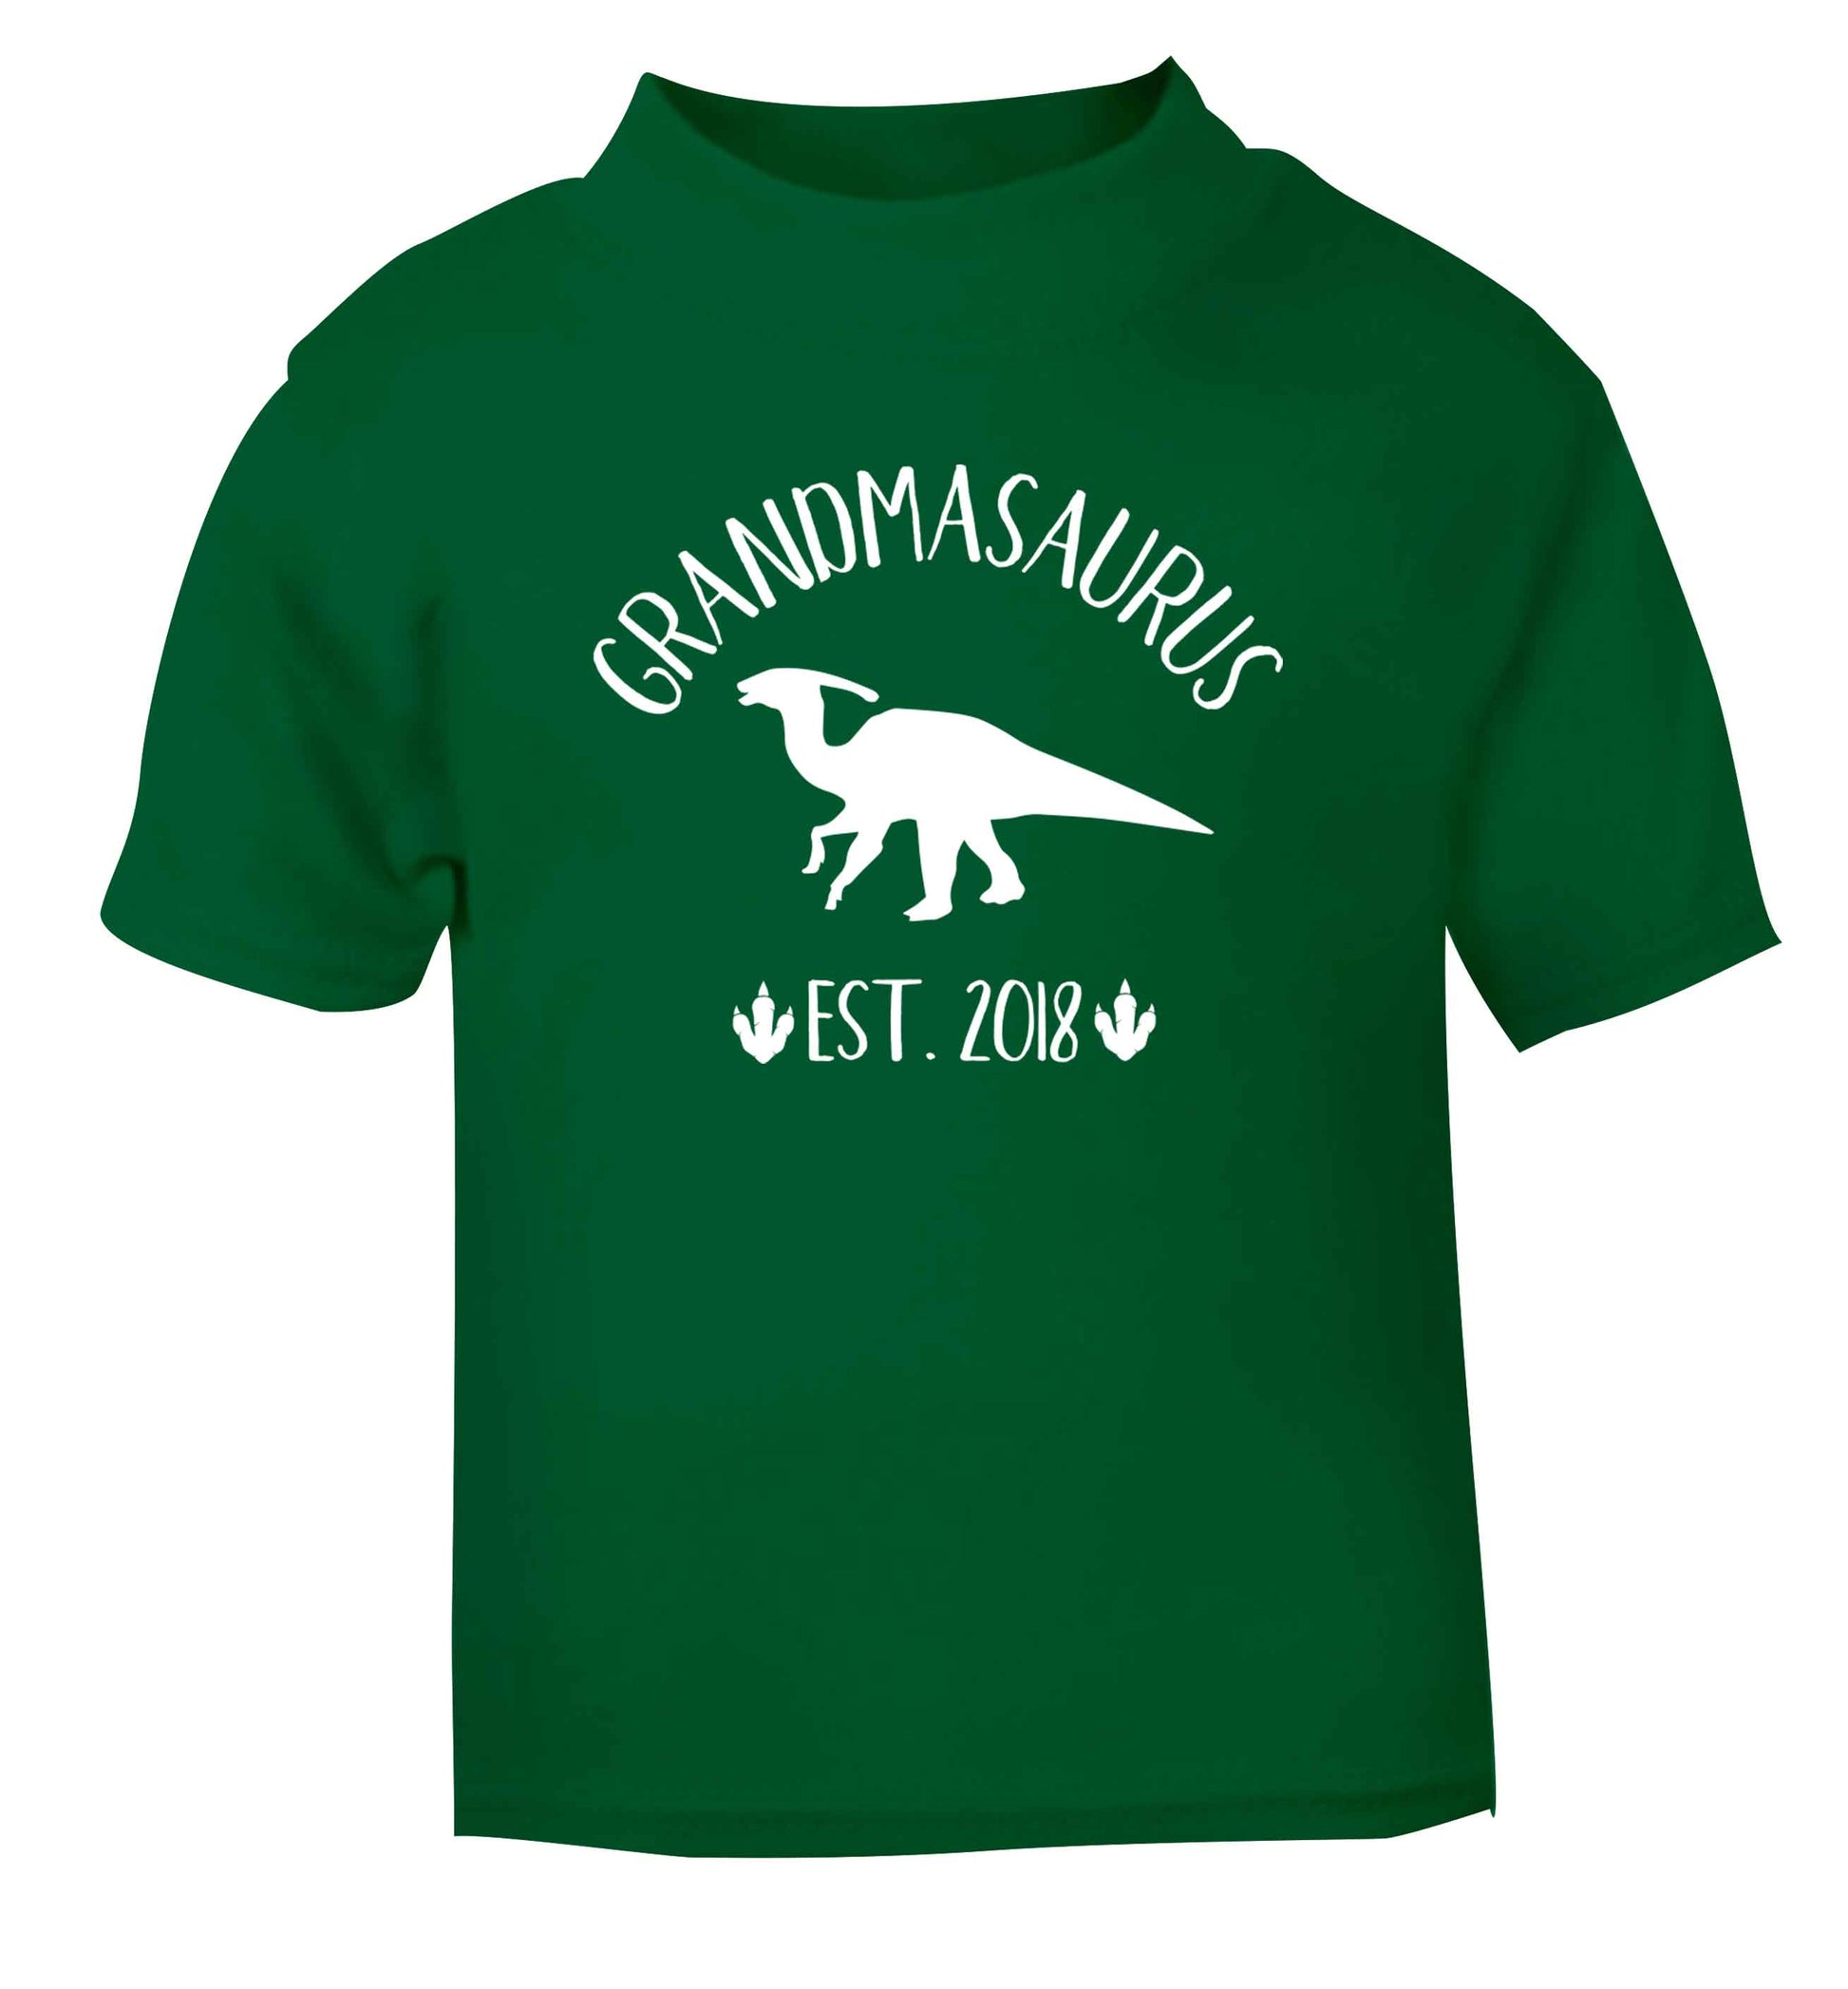 Personalised grandmasaurus since (custom date) green Baby Toddler Tshirt 2 Years